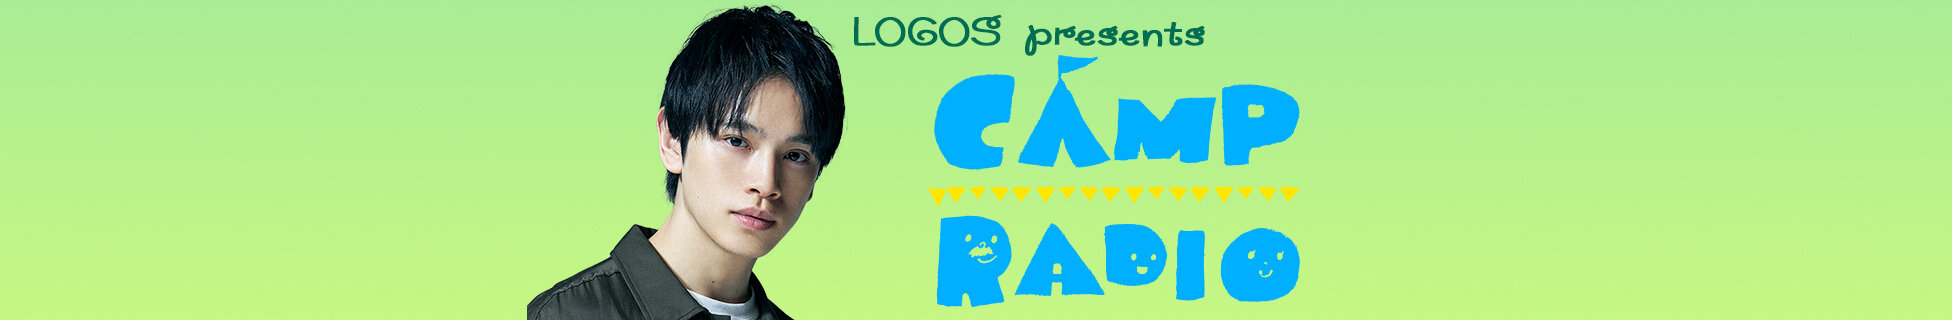 LOGOS presents CAMP RADIO